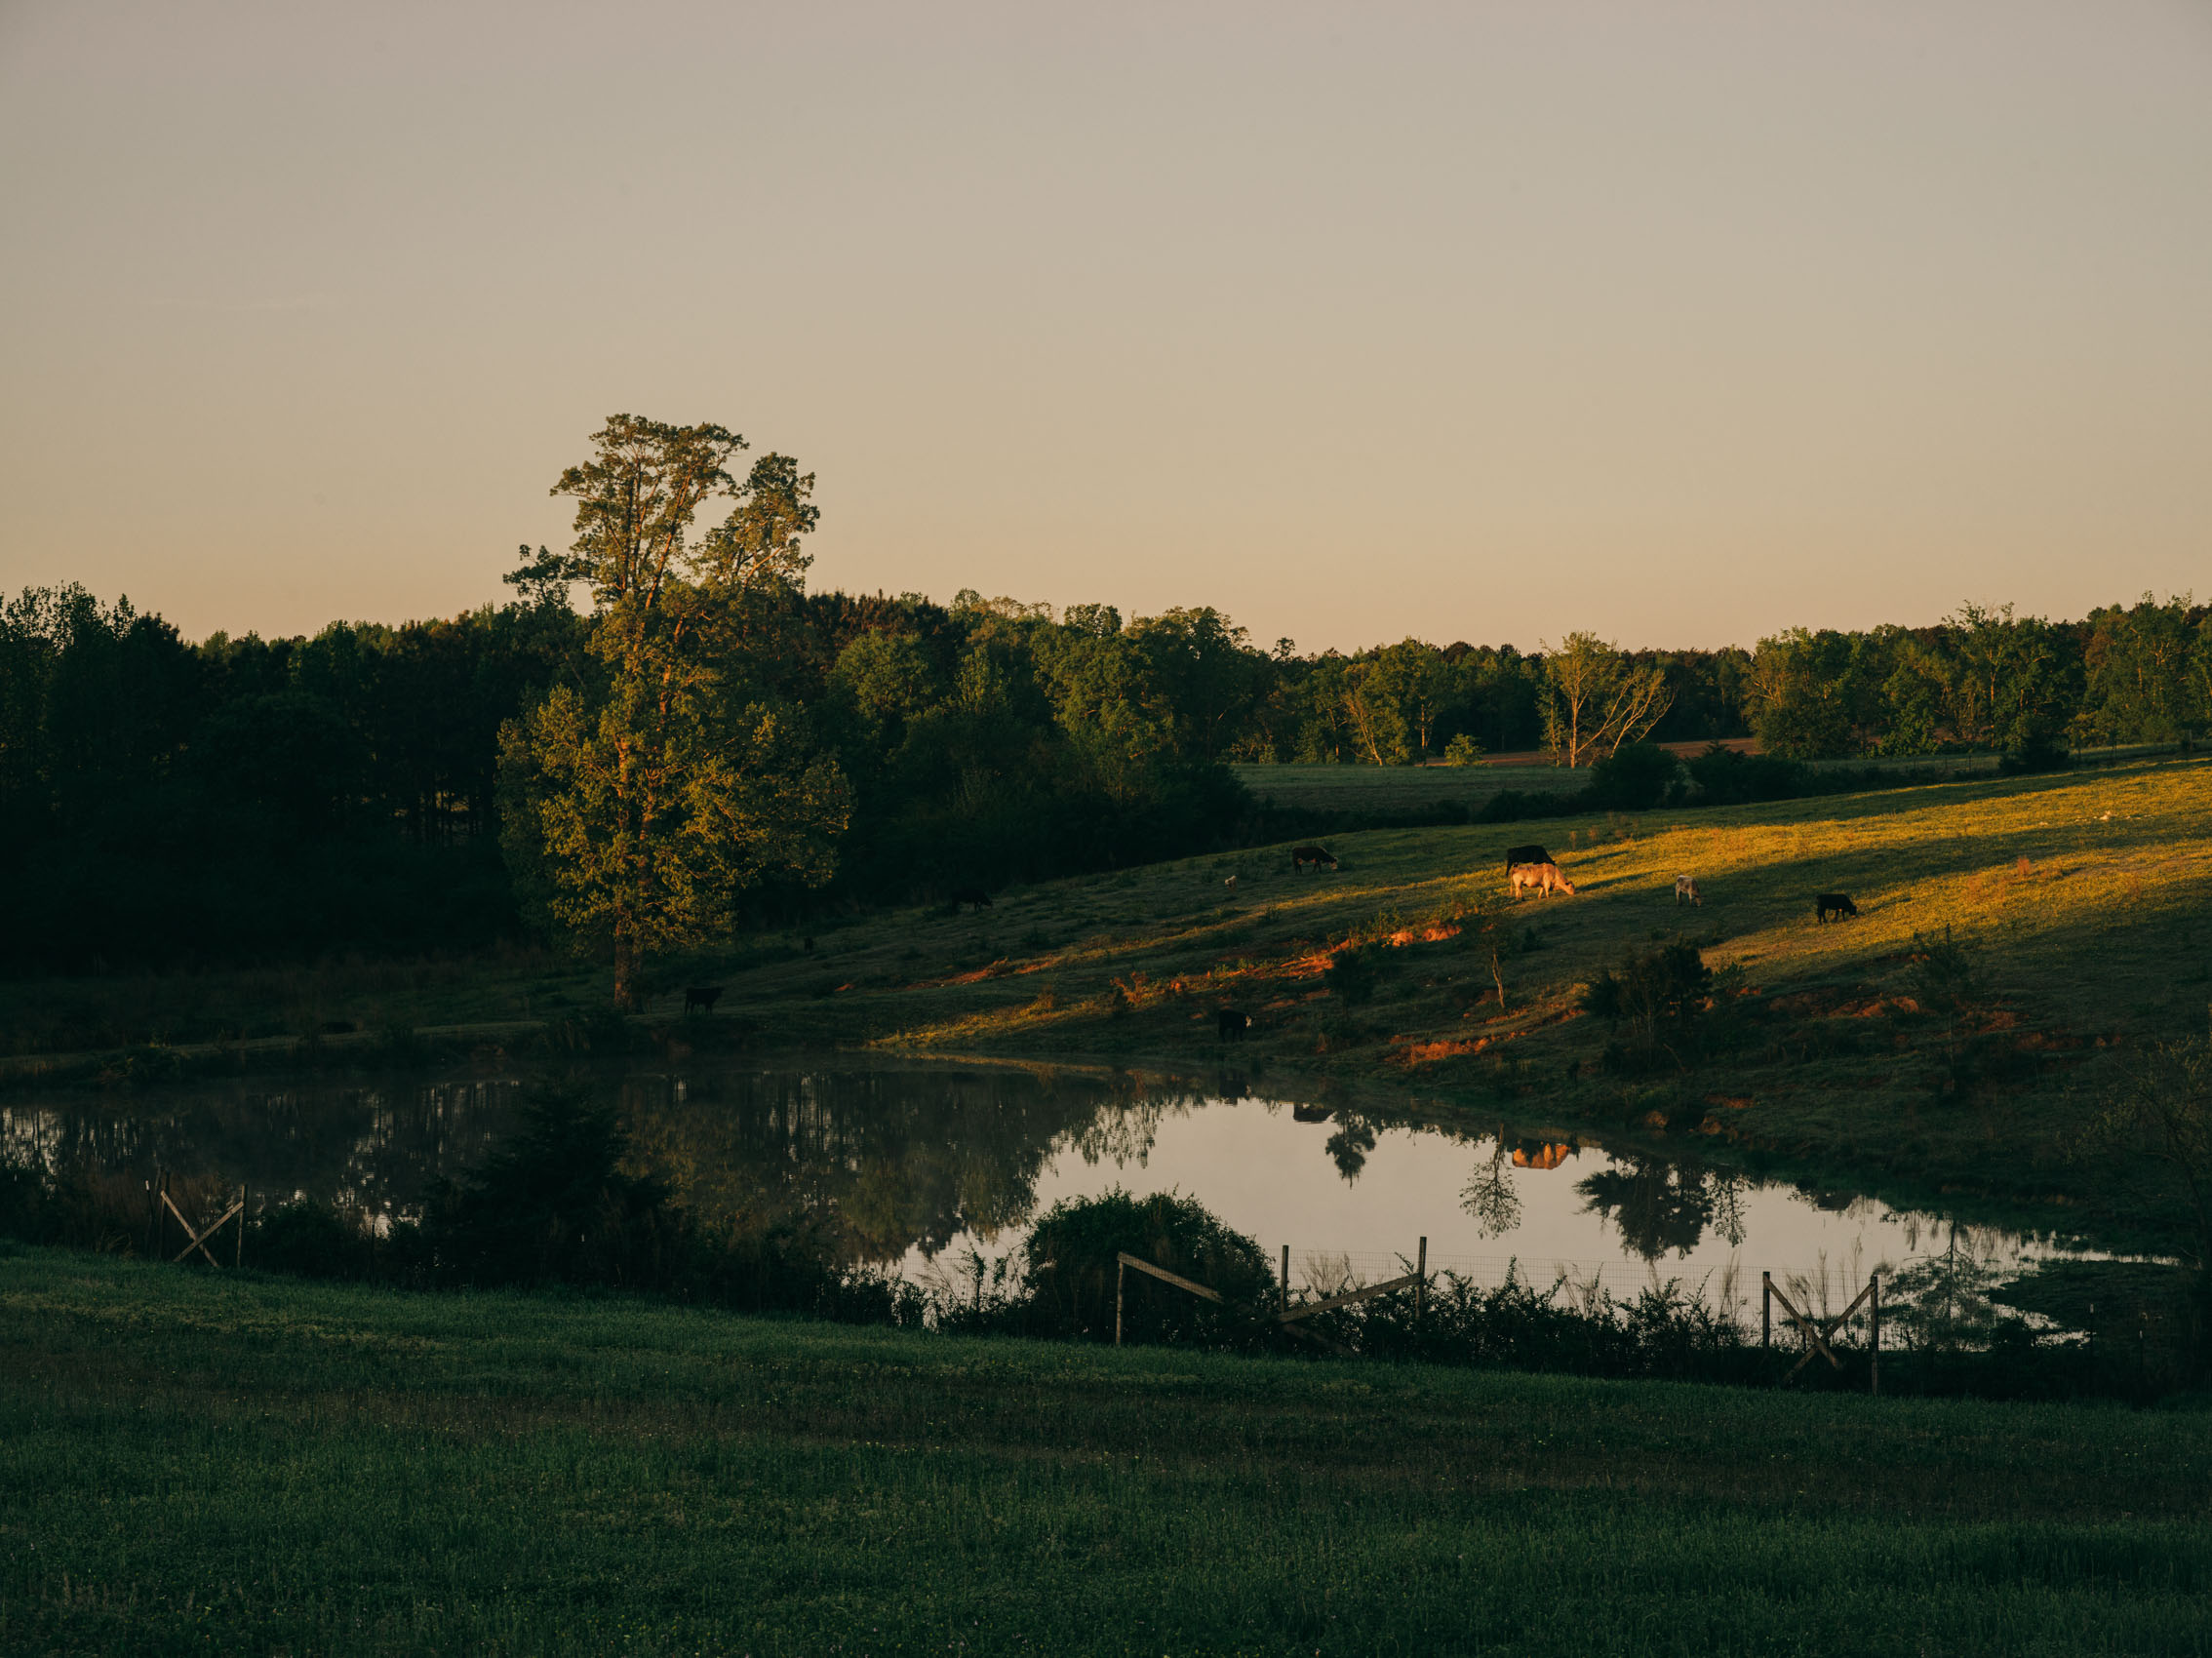 Cattle graze near the pond at sunrise